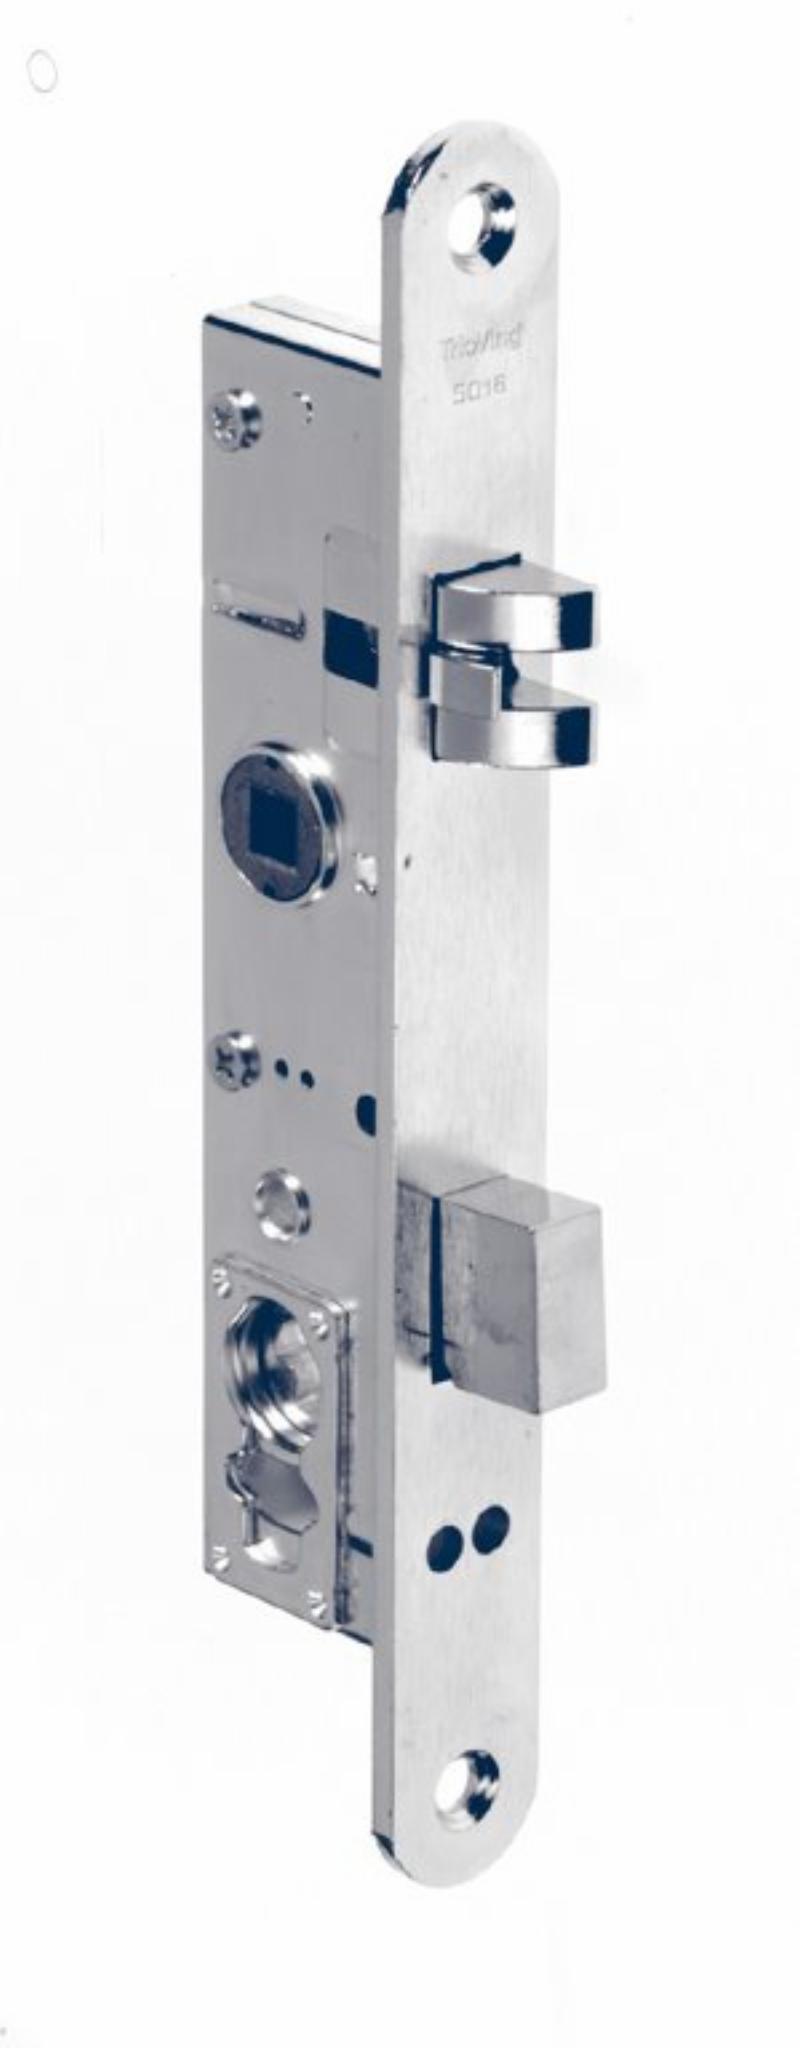 Assa narrow profile locking box 5016